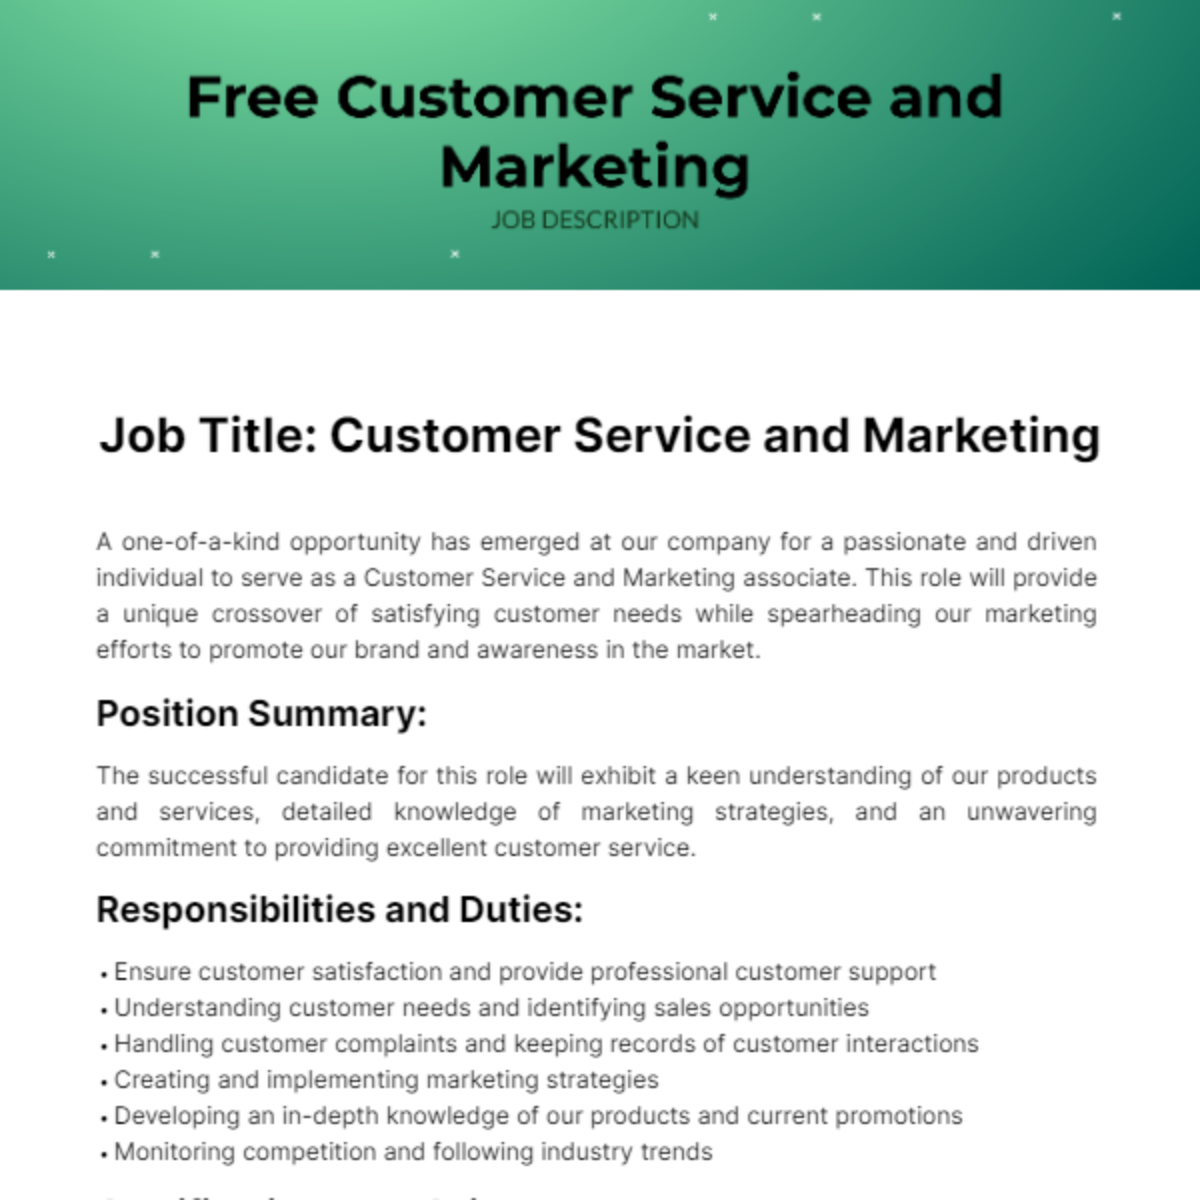 Free Customer Service and Marketing Job Description Template